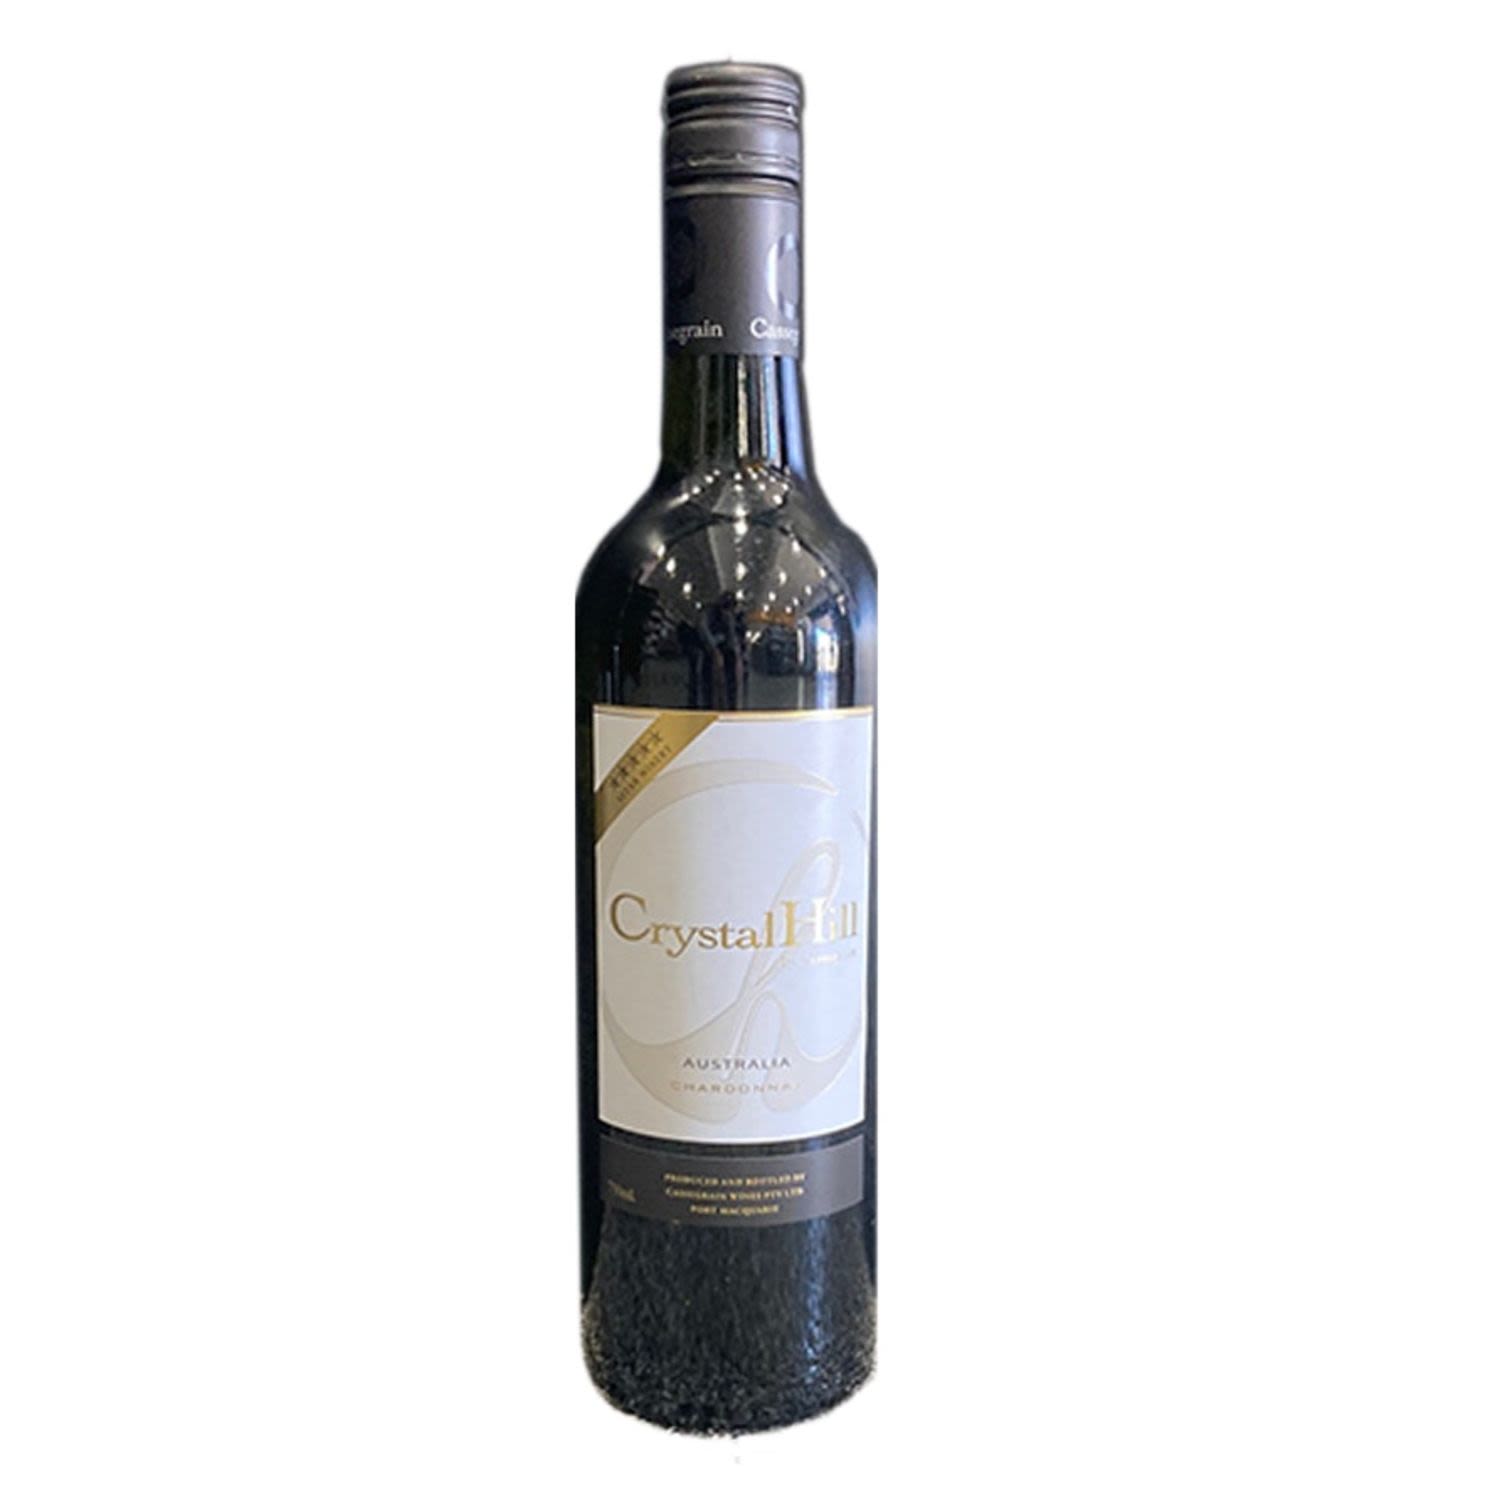 Crystal Hill Tumbarumba Chardonnay 750mL Bottle